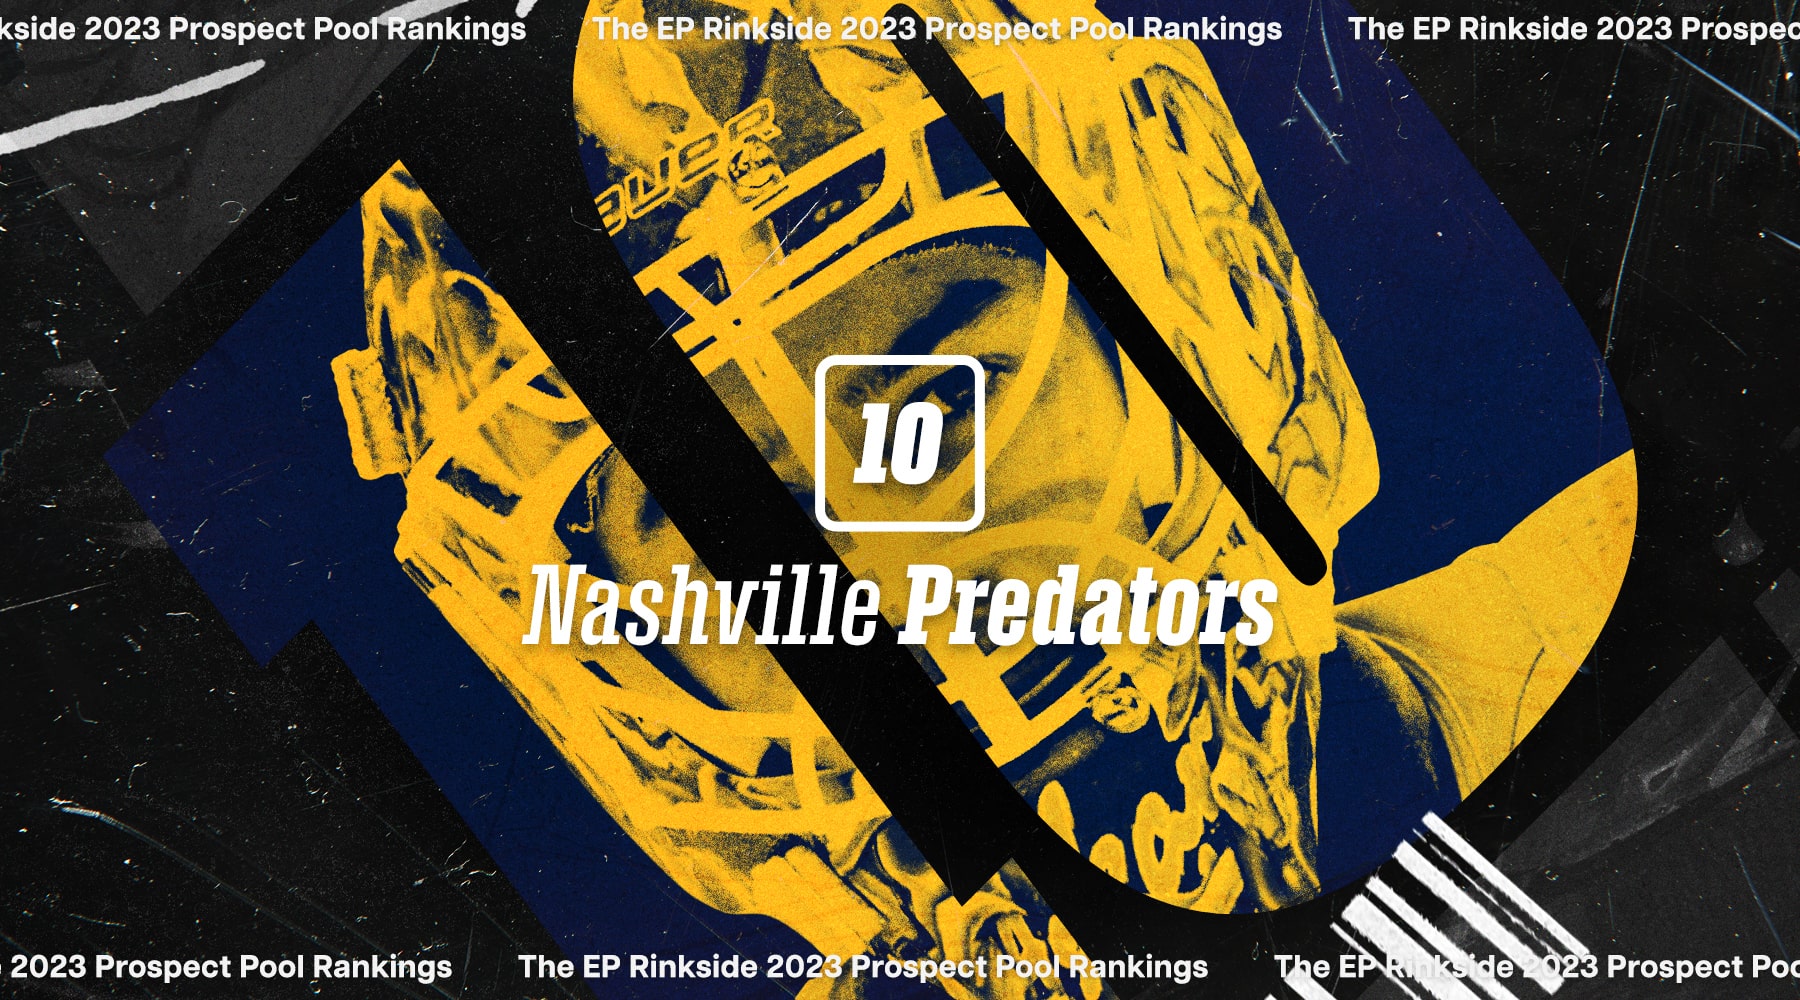 EP Rinkside 2023 NHL Prospect Pool Rankings: No. 10-ranked Nashville Predators